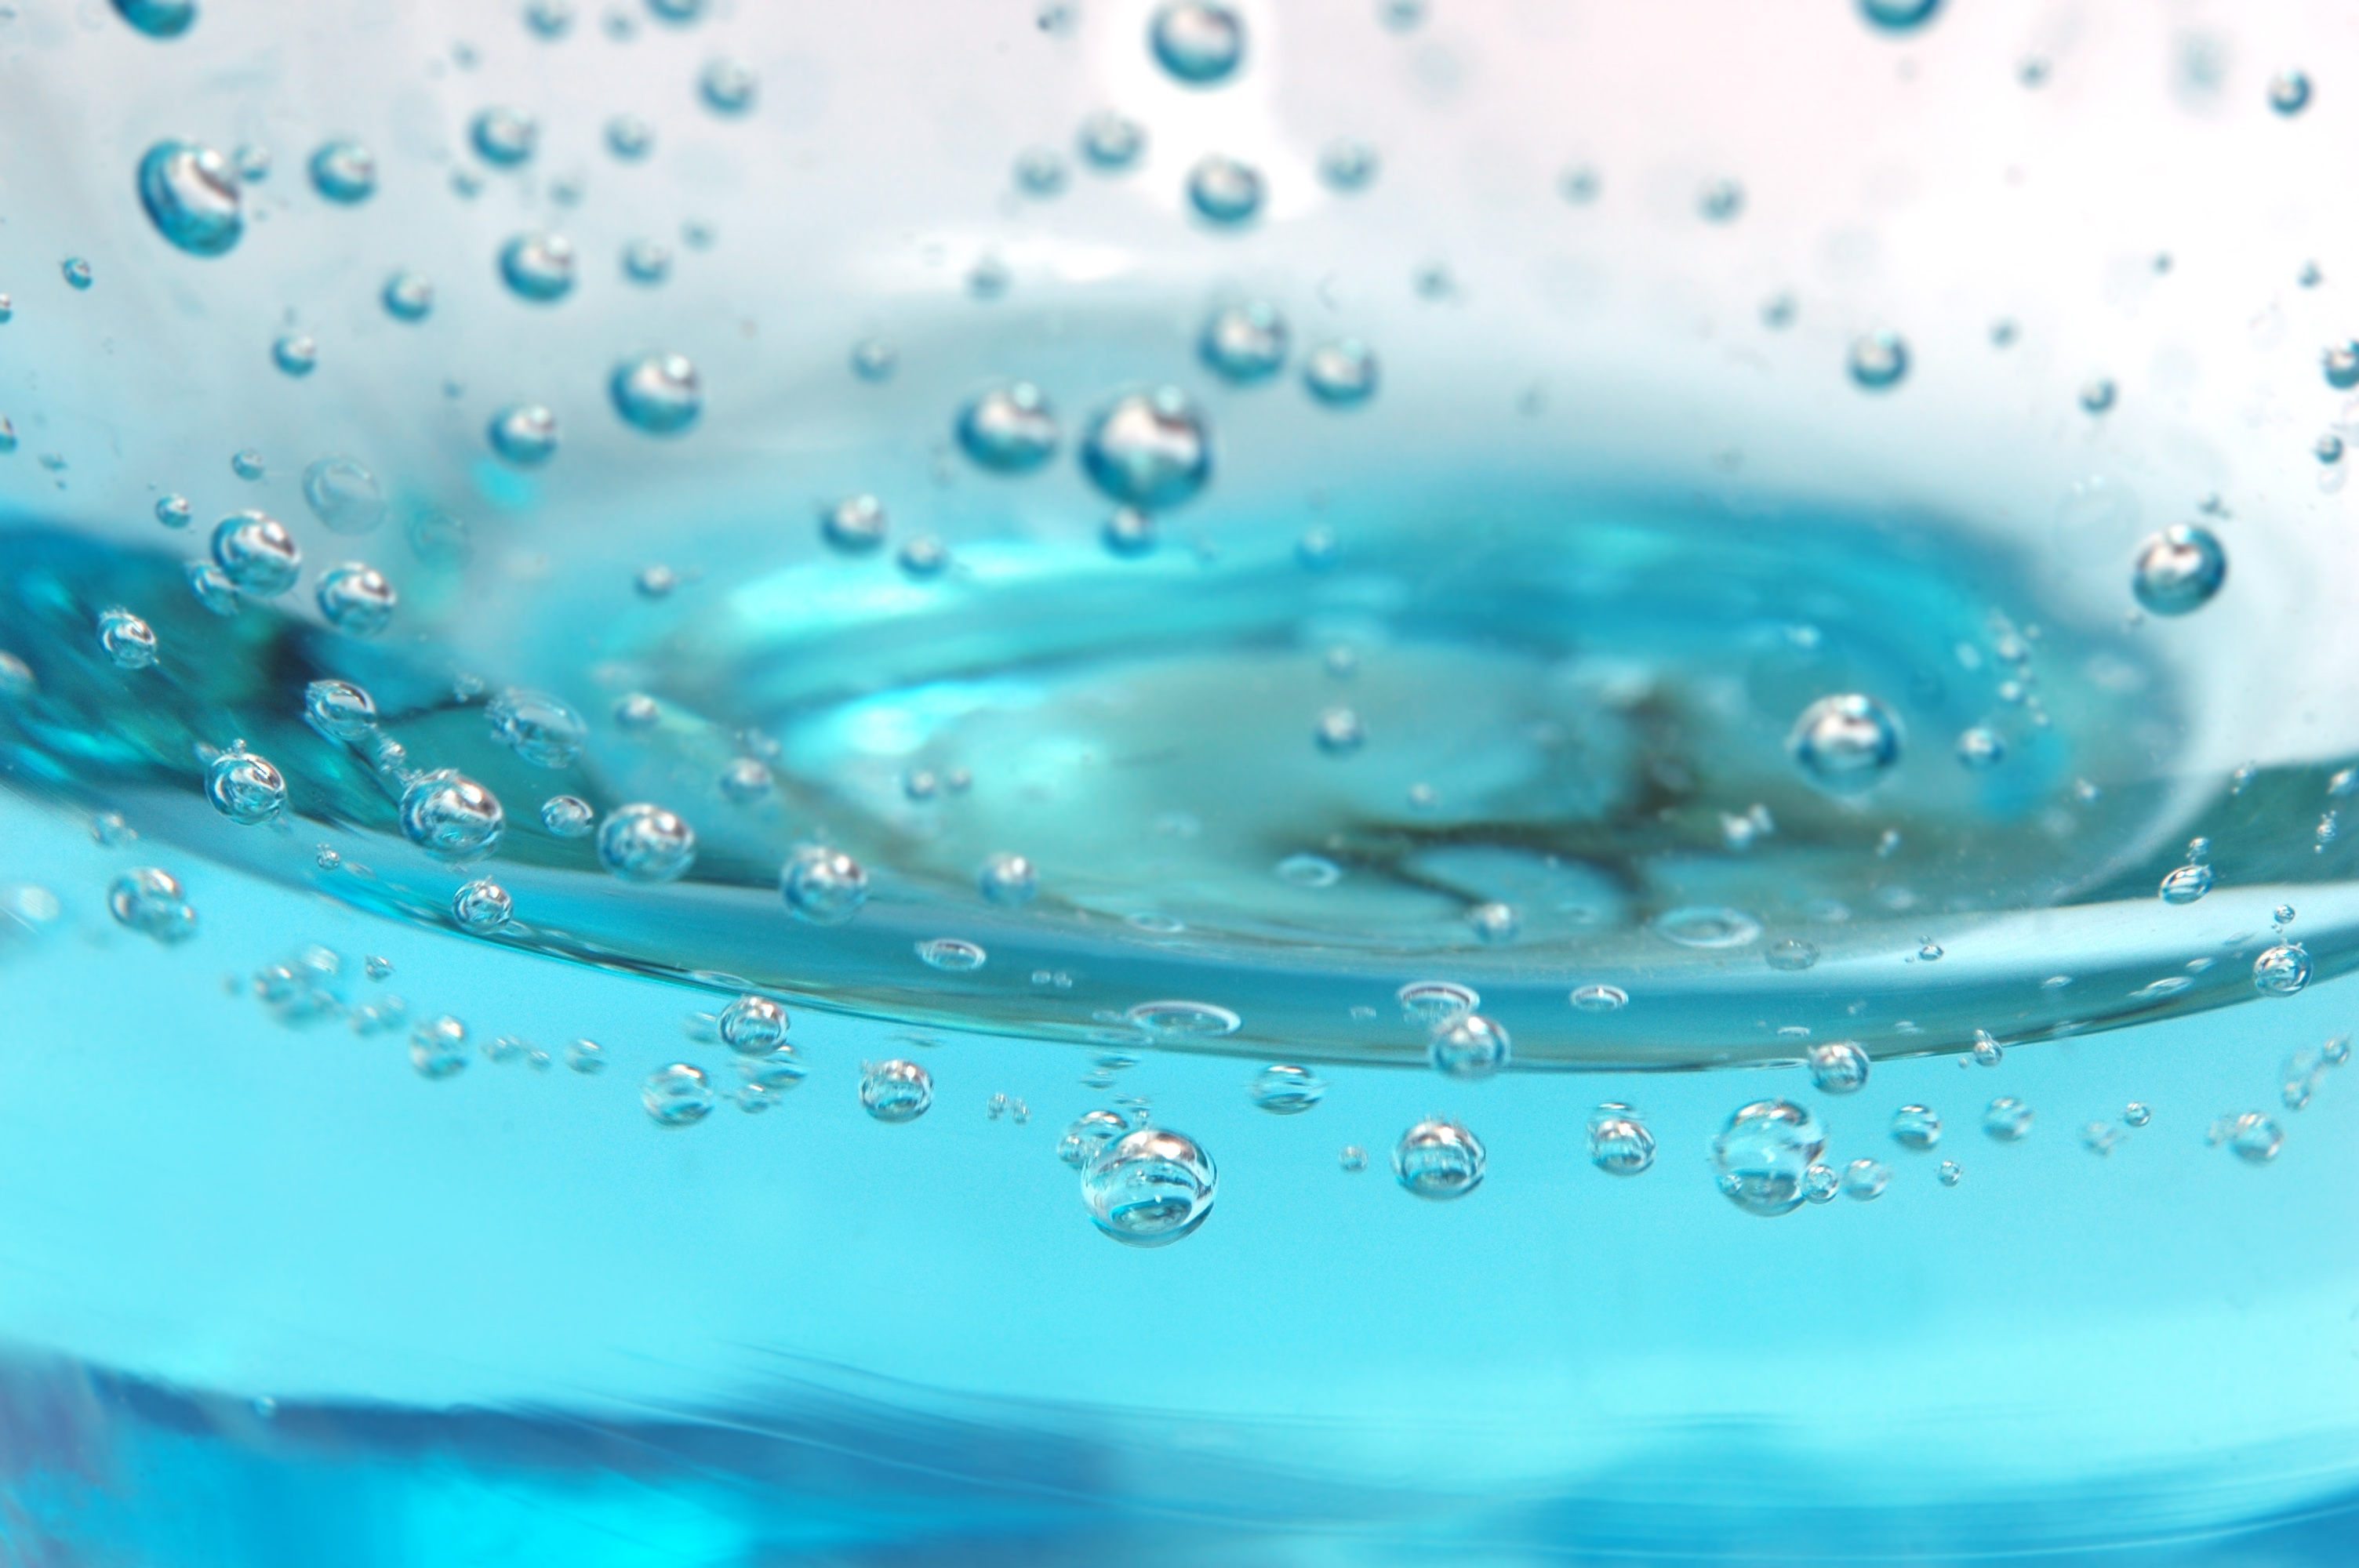 Beneficiile colon hidroterapiei | Ozonoterapie Timisoara | Clinica Medozon